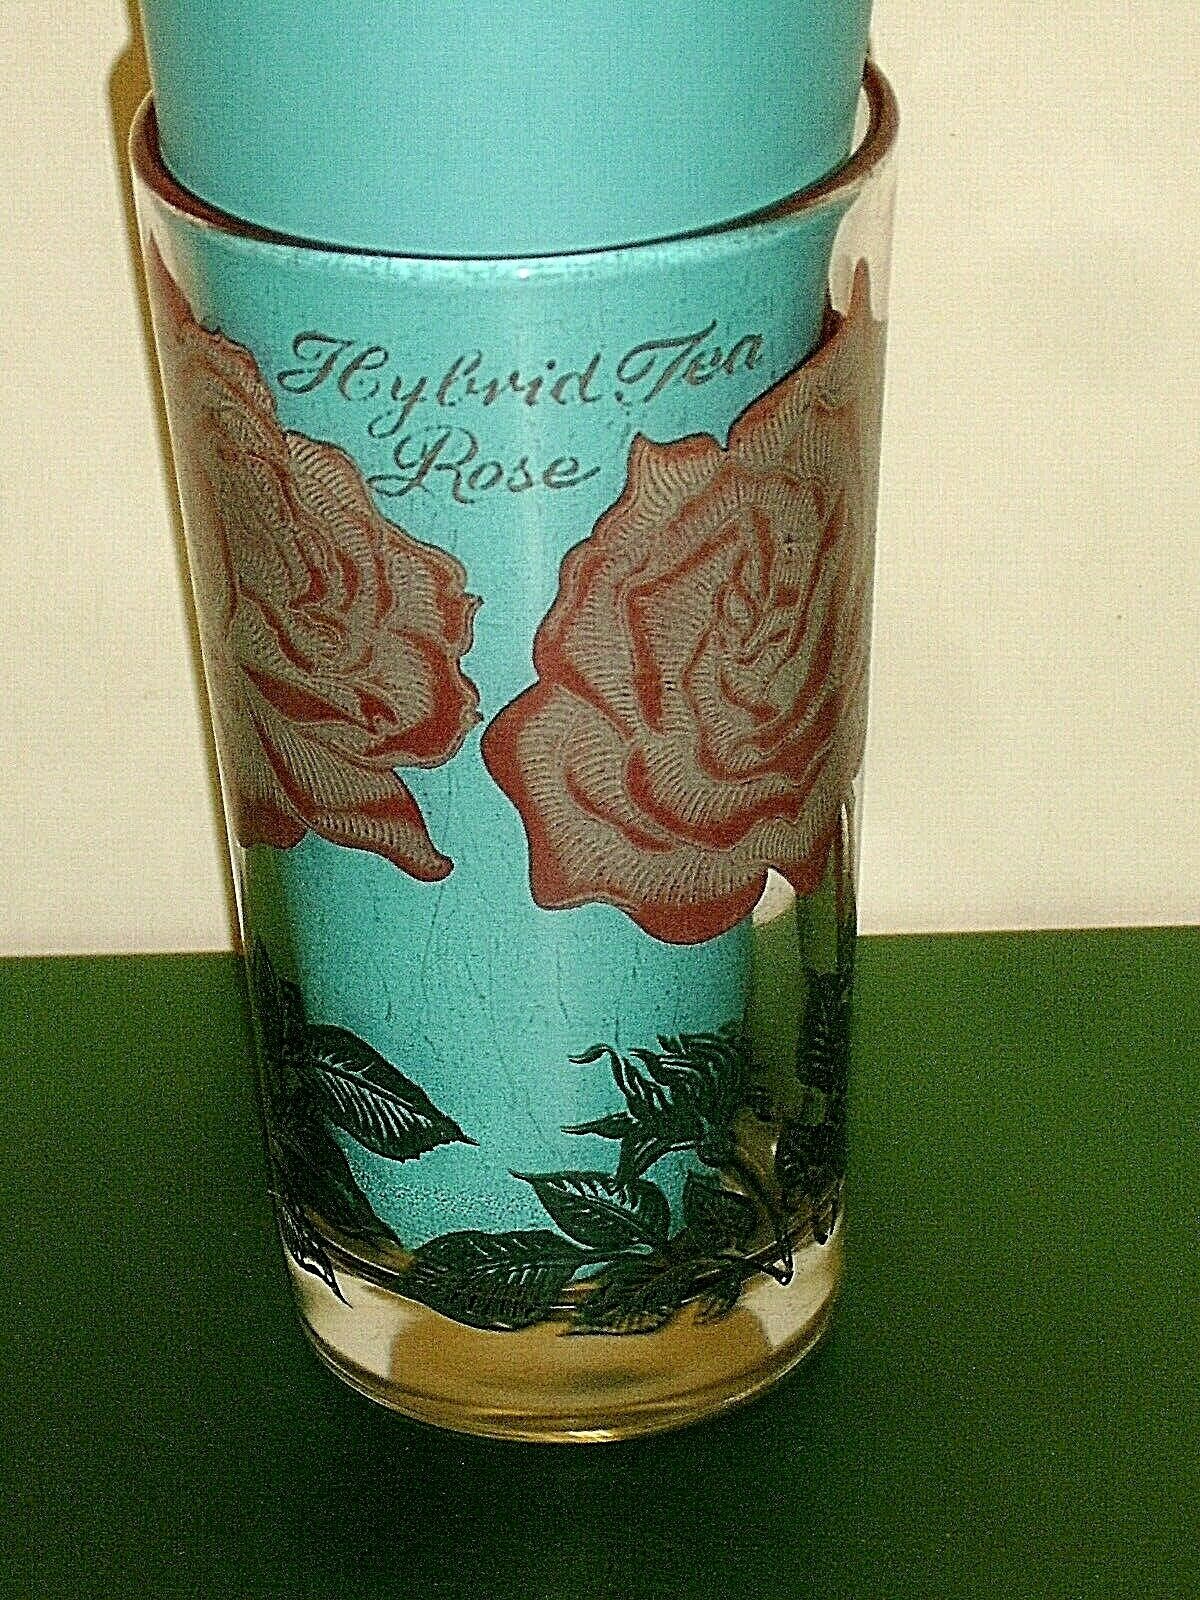 Vintage Boscul Hybrid Tea Rose Peanut Butter Glass Pink Lettering Frosted Roses